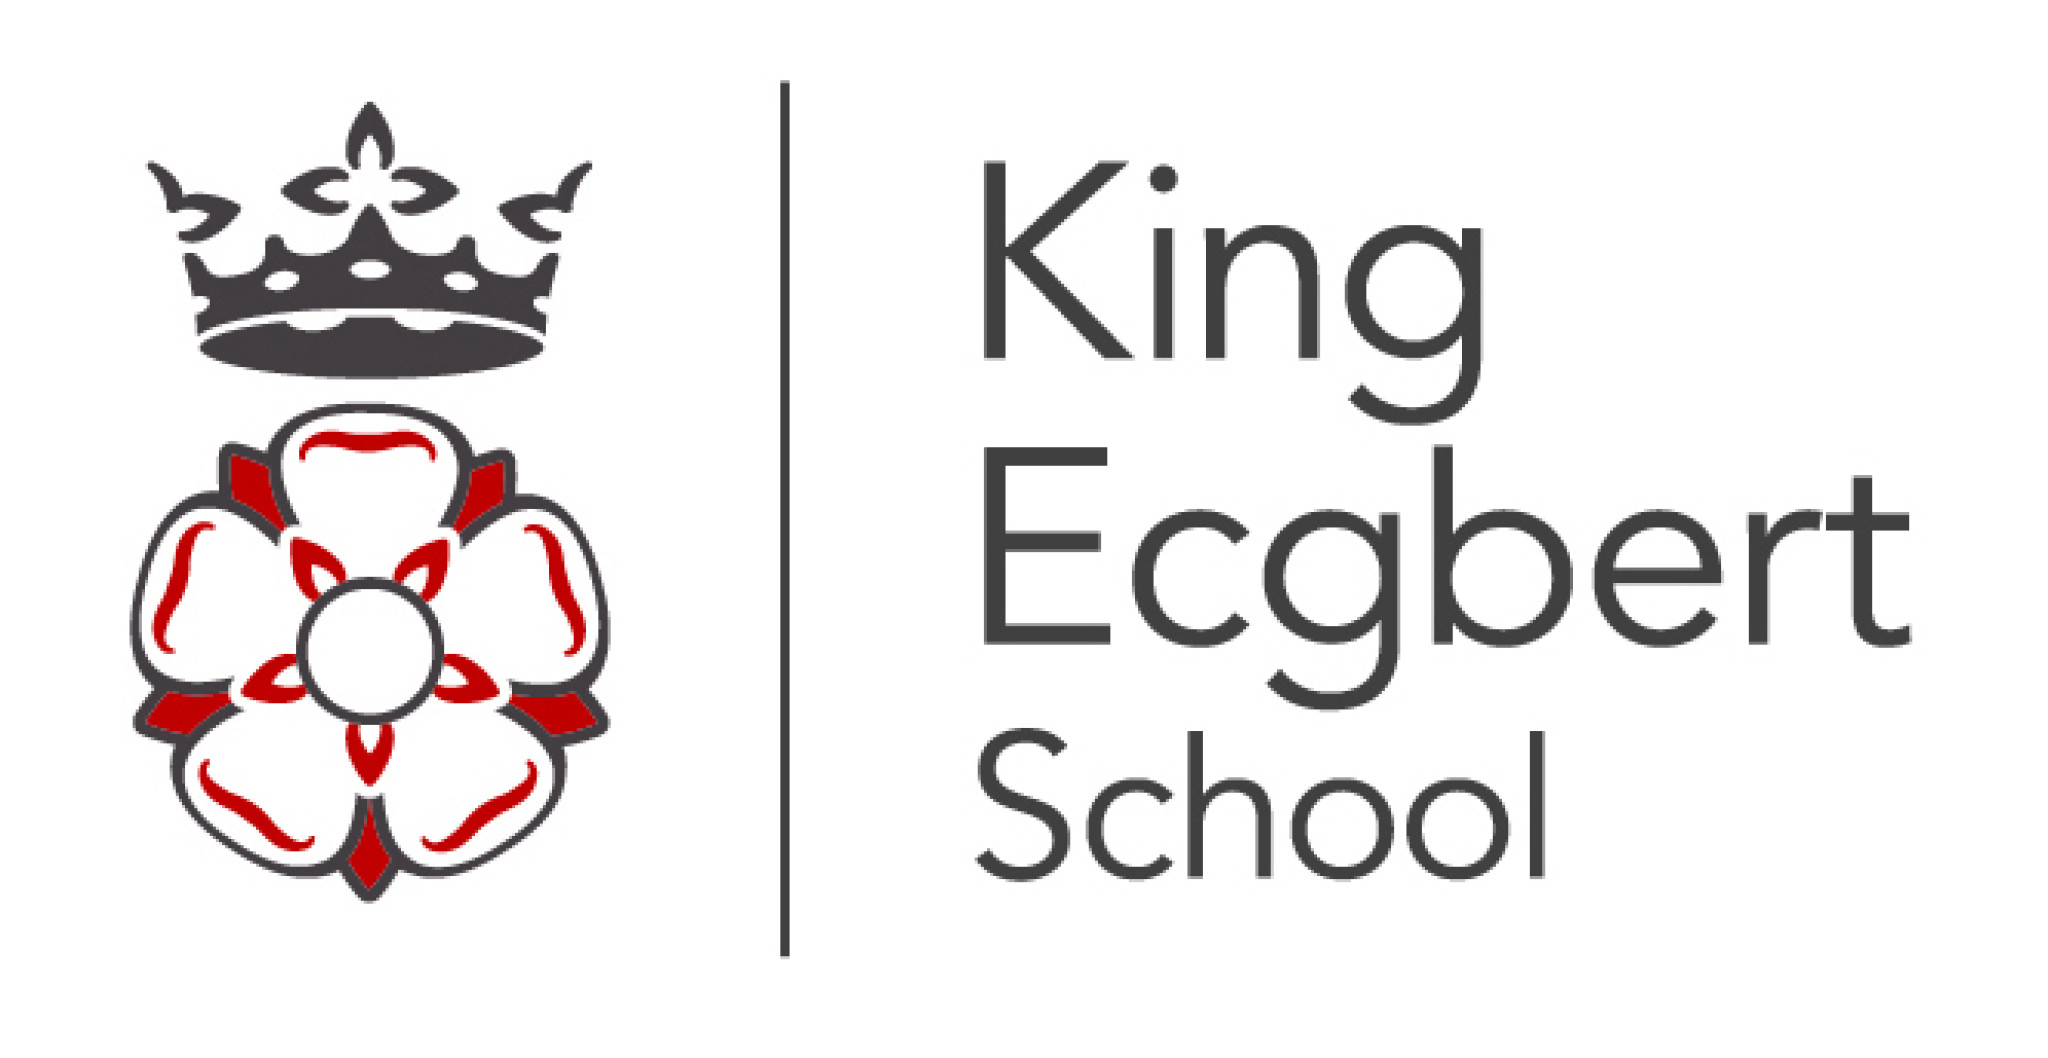 King Ecgbert School.jpg